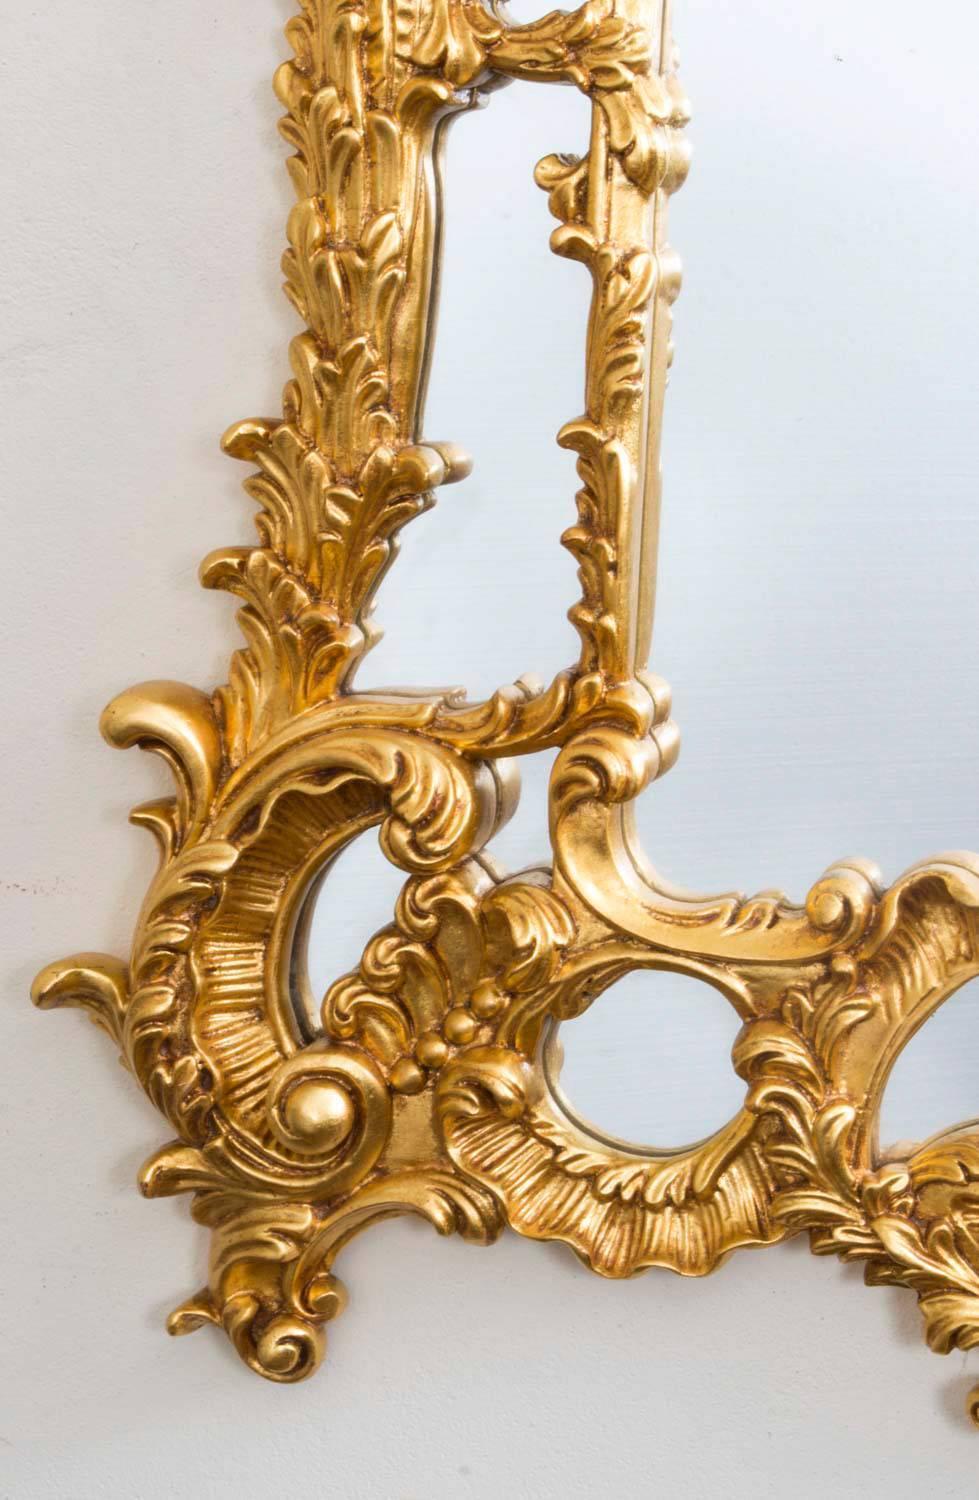 Beautiful Italian Rococo Giltwood Decorative Mirror For Sale at 1stdibs